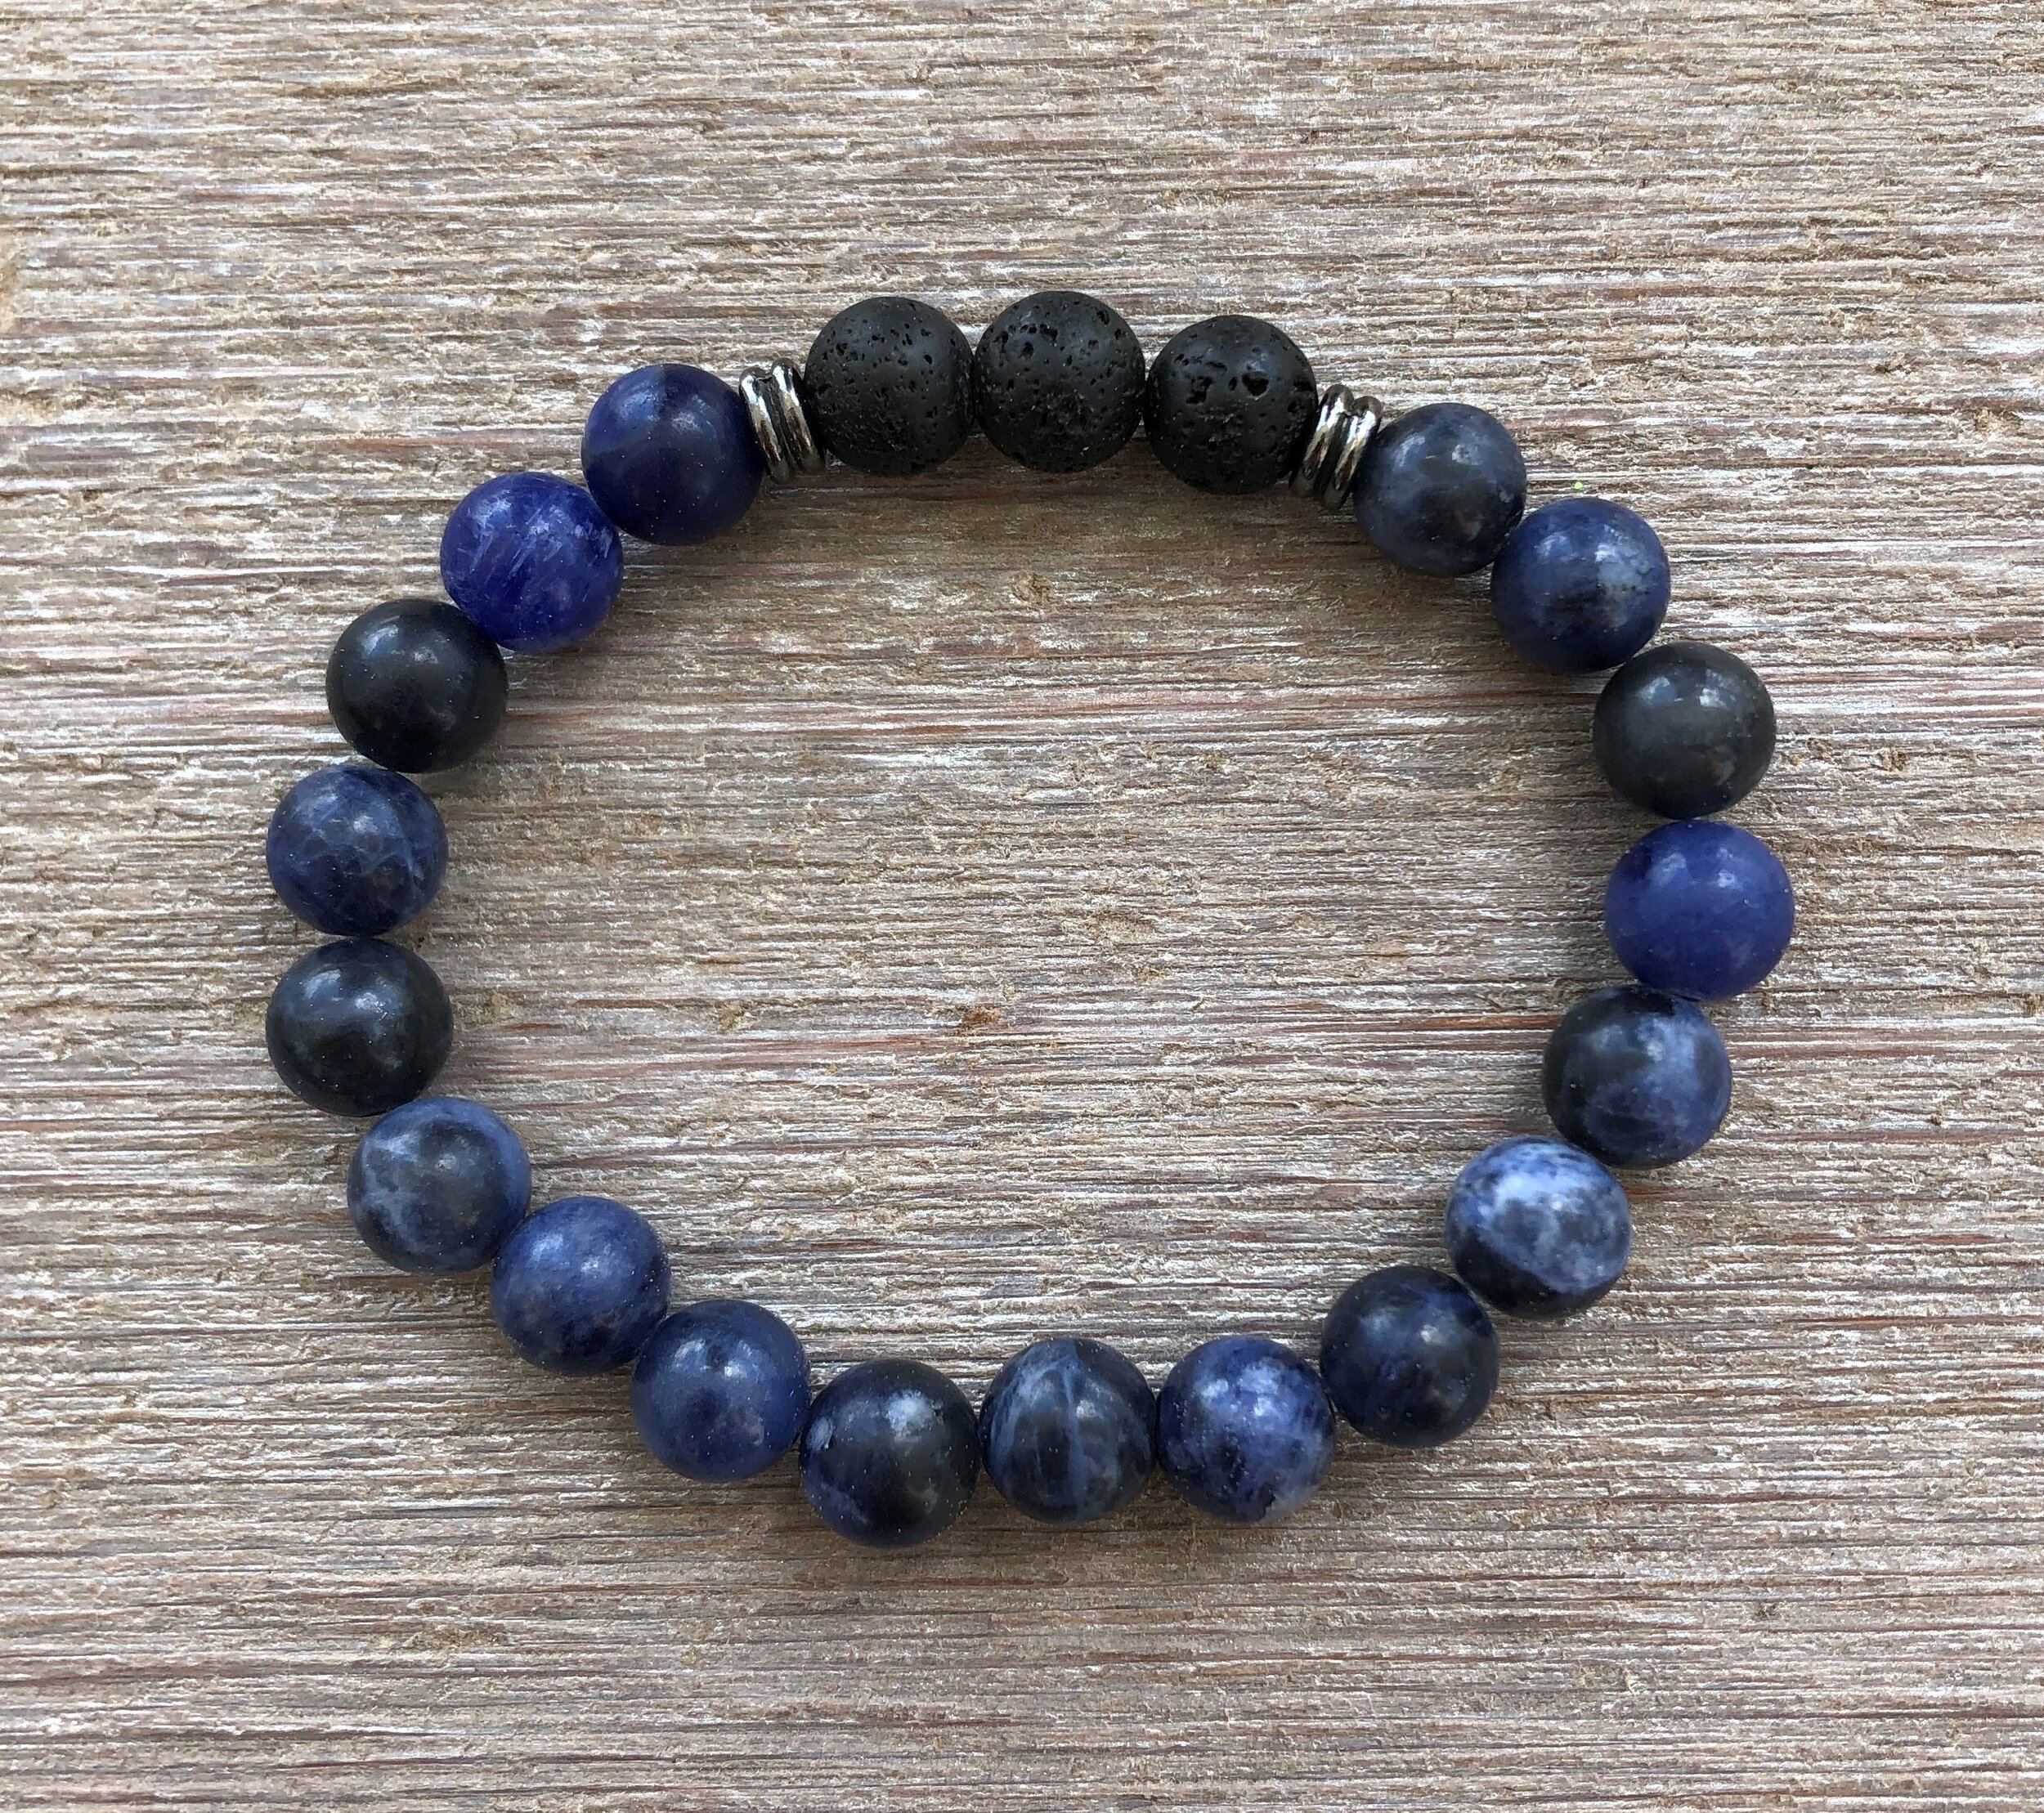 SIVITE Blue Cats Eye Lava Rock Natural Stone Beads Stretch Bracelet Essential Oil Diffuser Bracelet 8MM